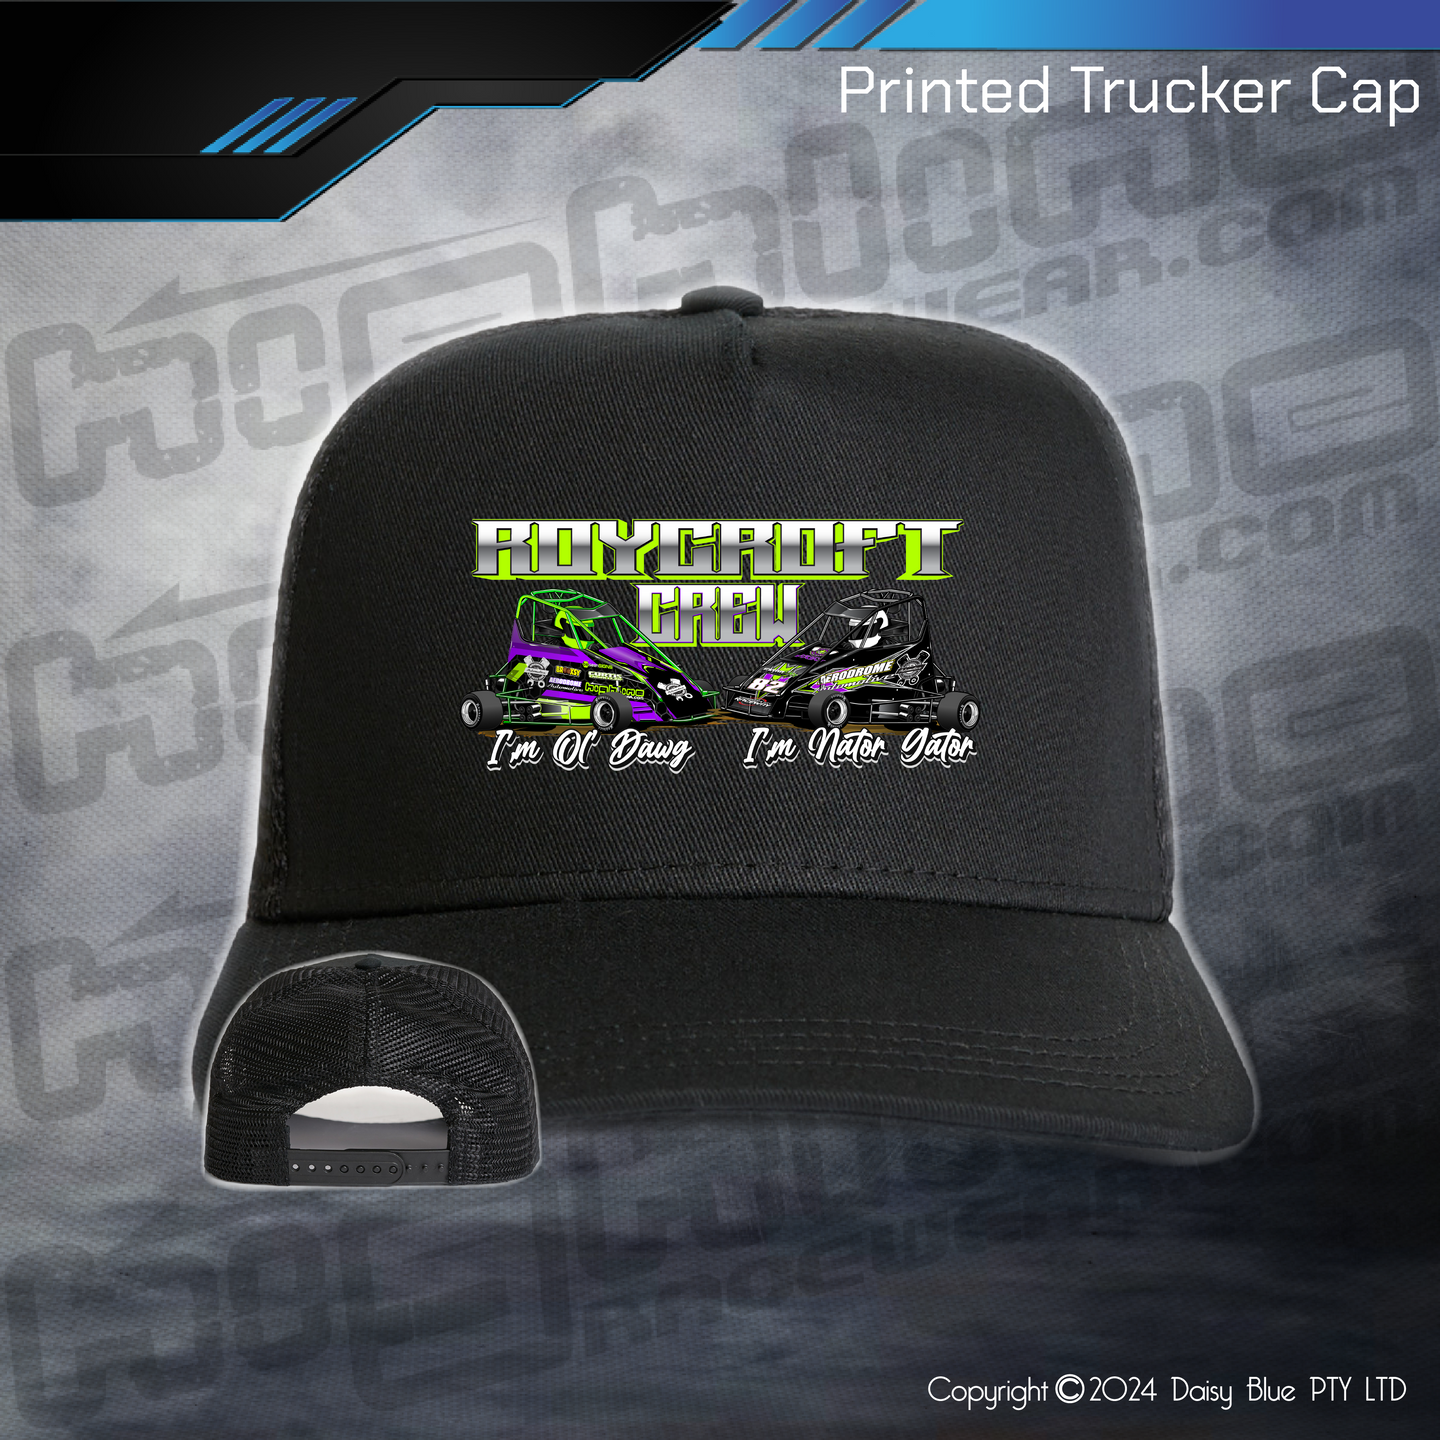 Printed Trucker Cap - Roycroft Brothers